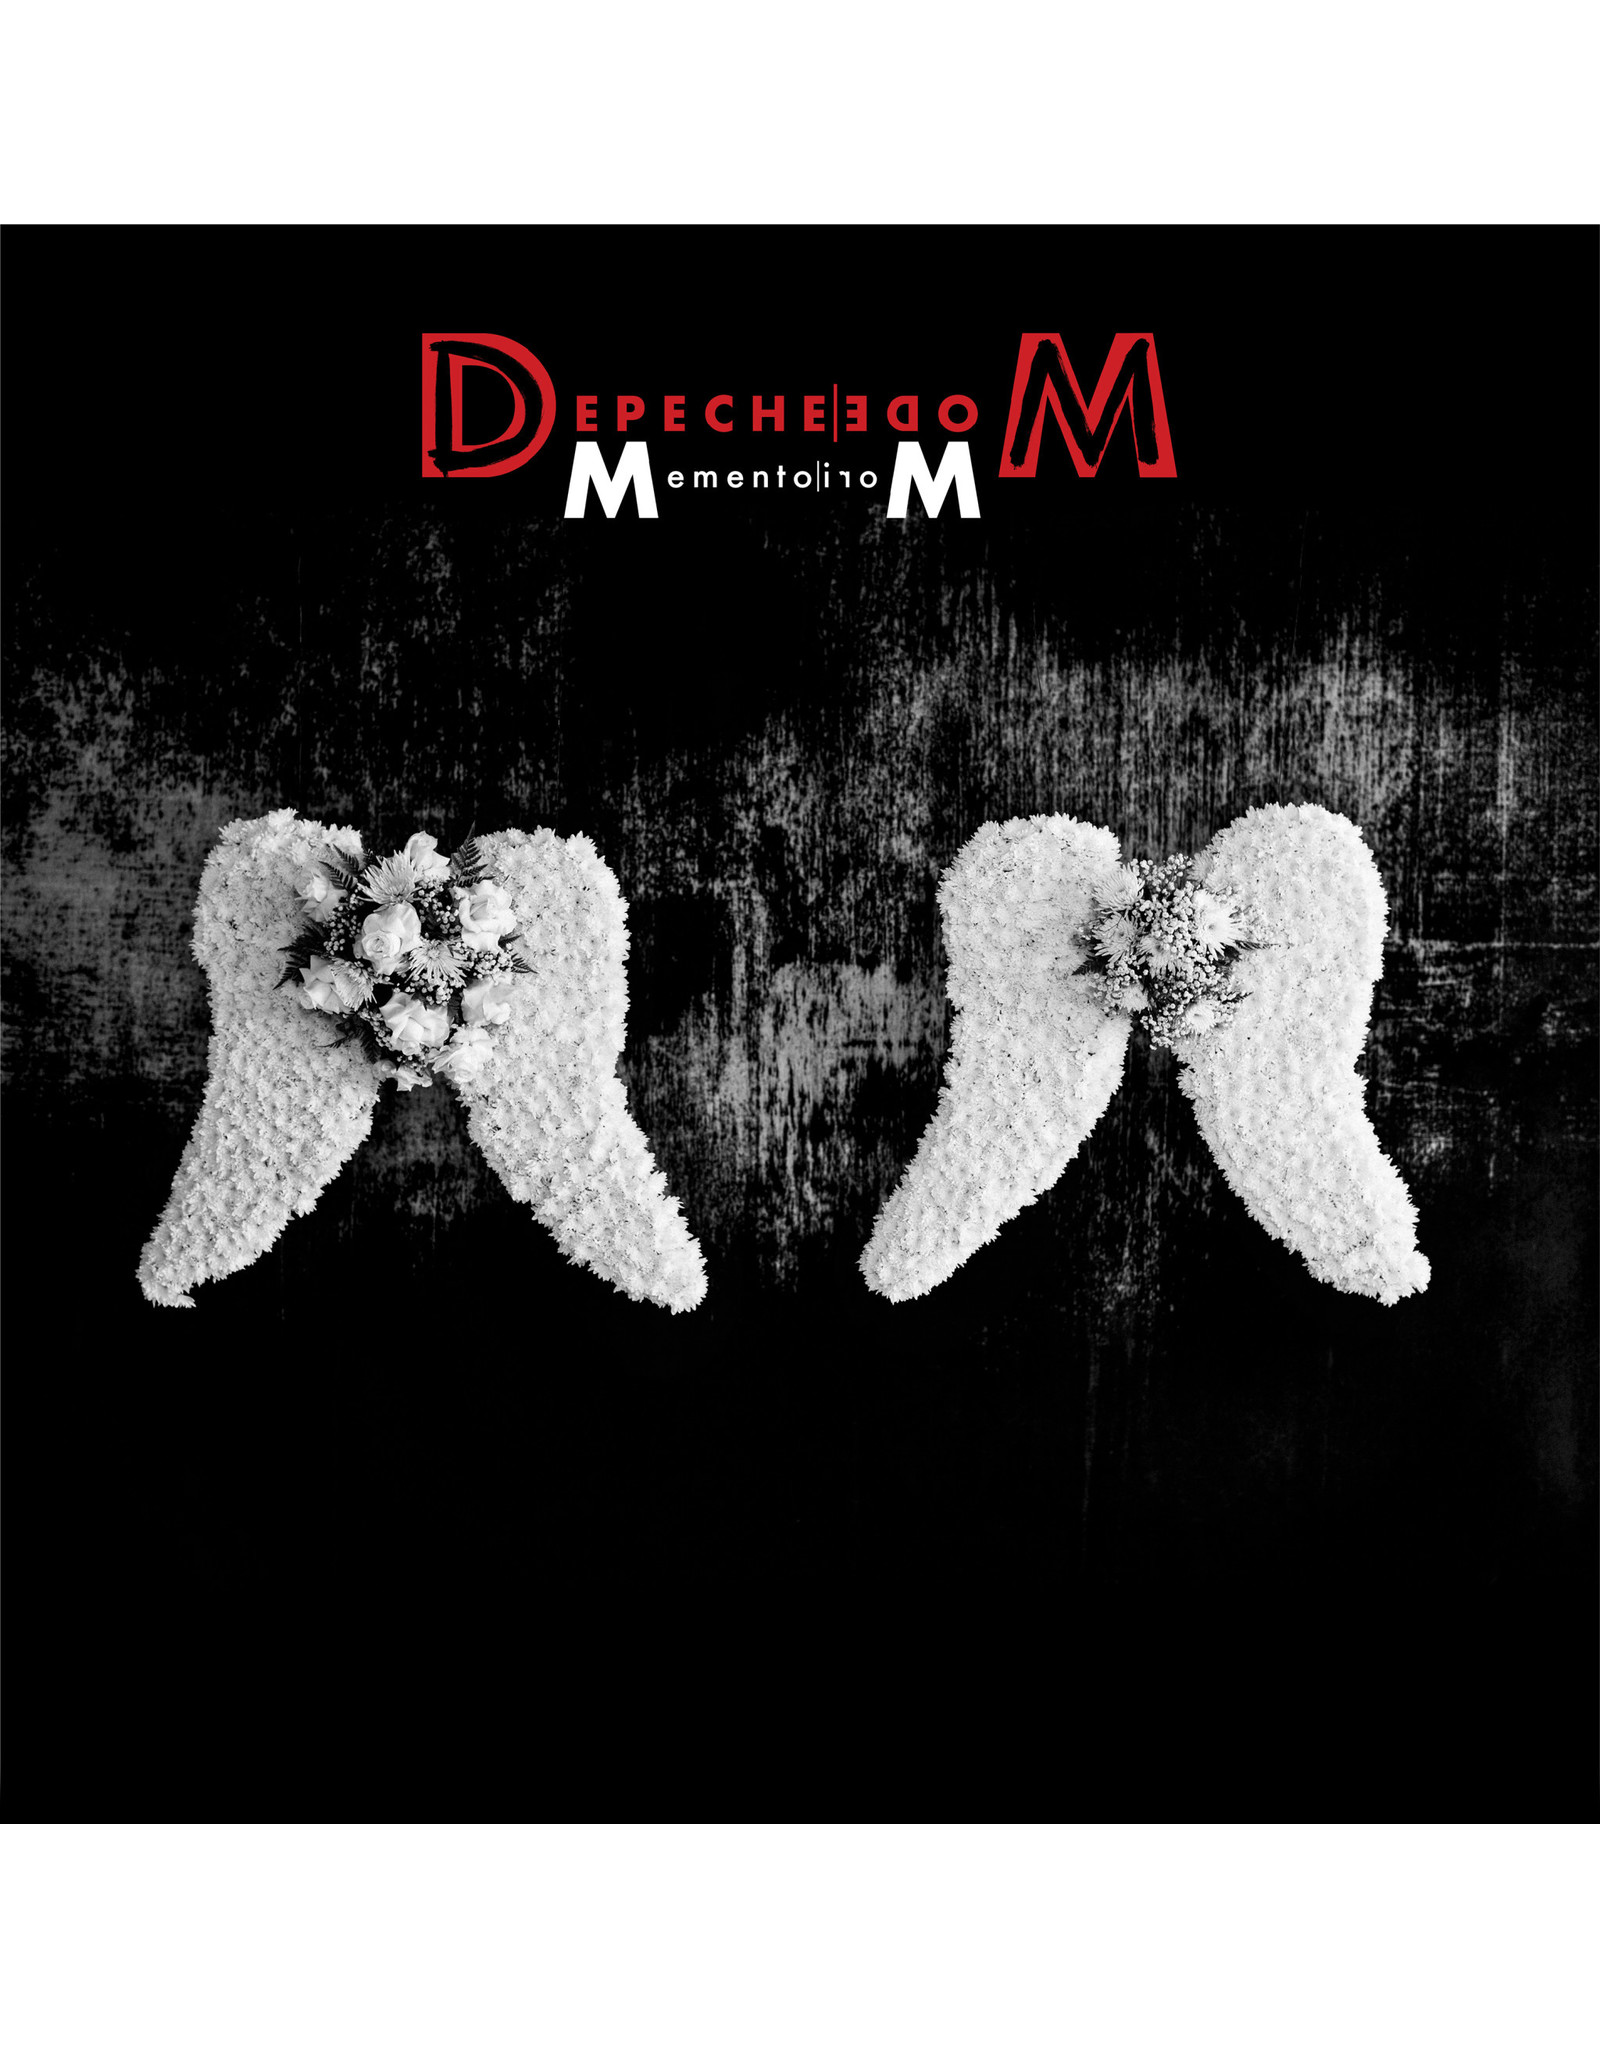 Depeche Mode - Memento Mori (Exclusive Red Vinyl)